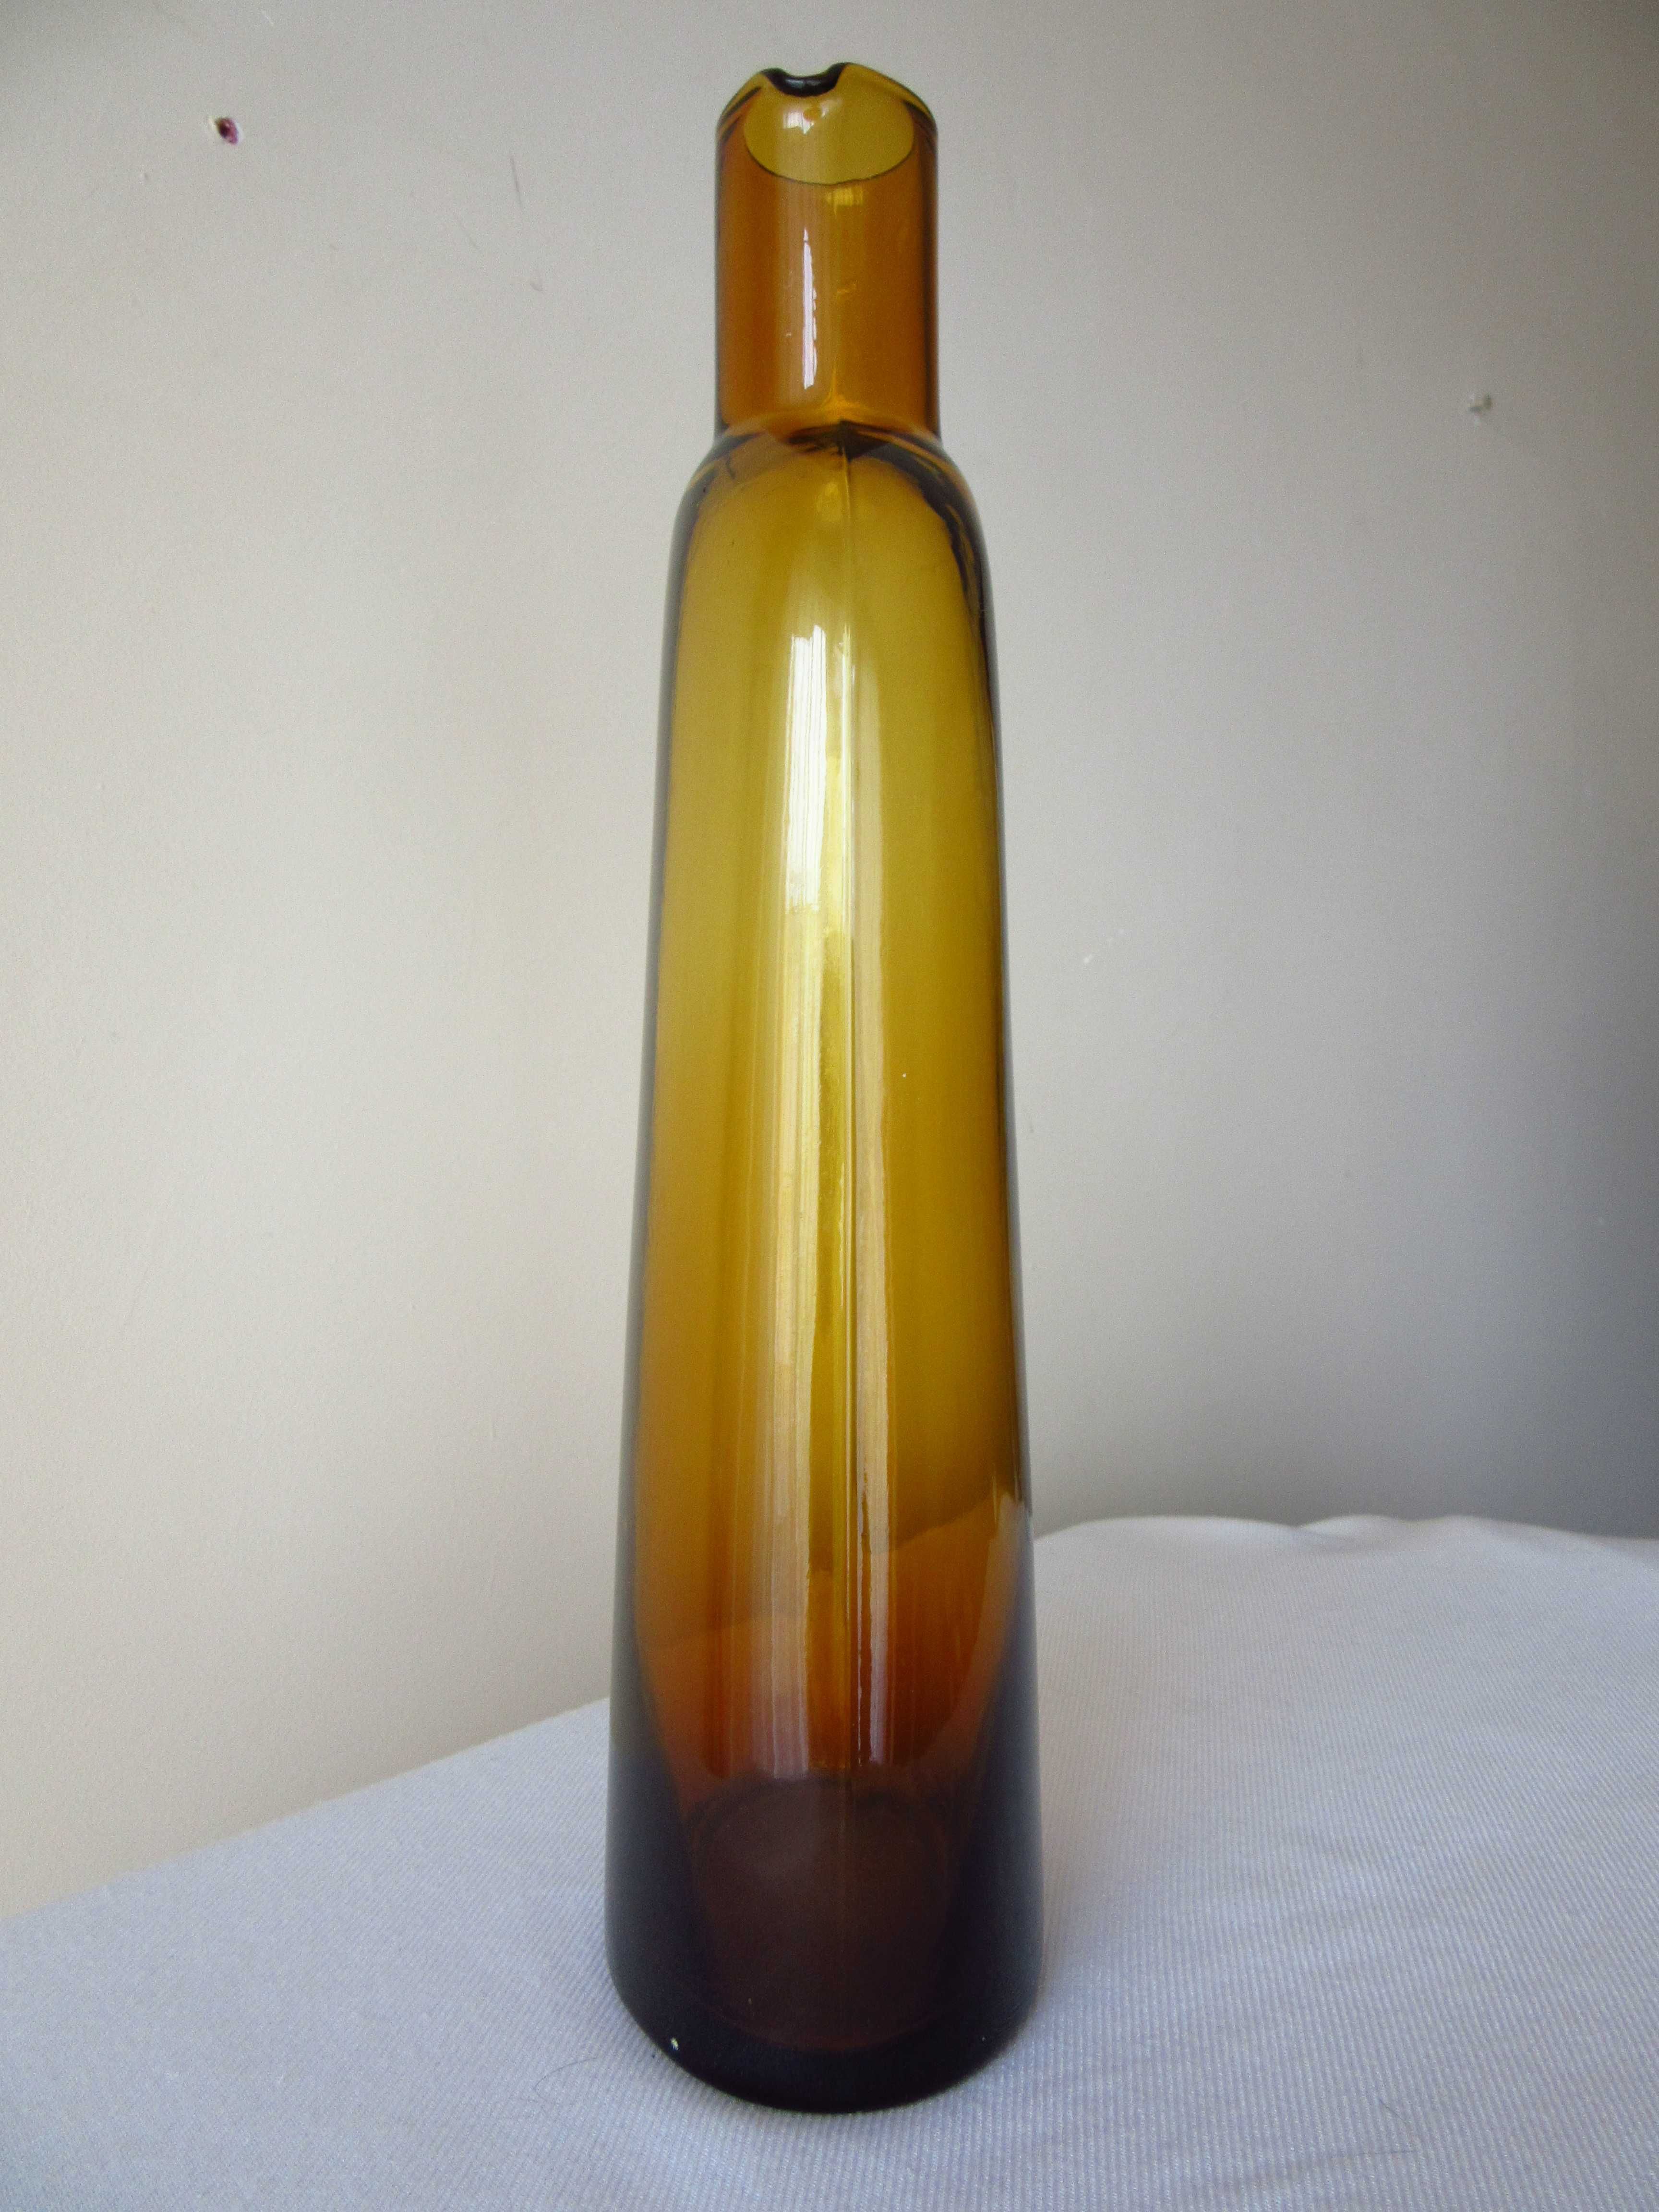 Szklany złocisty wazon butla styl TIMO SARPANEVA